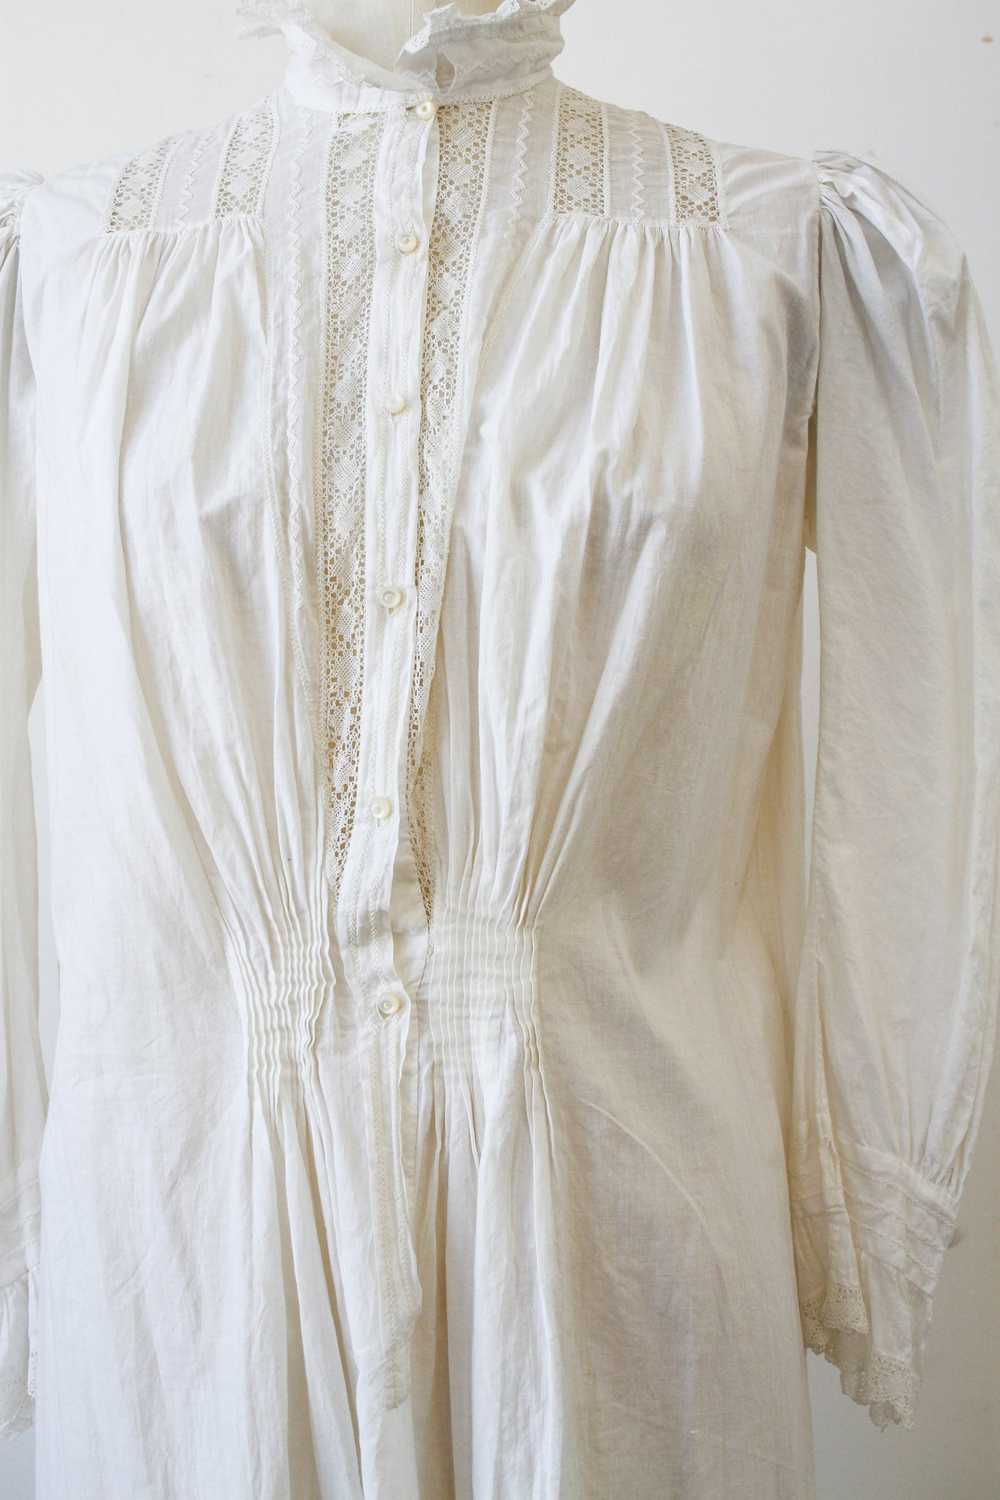 Victorian White Cotton Puff Sleeve Night Dress - image 4